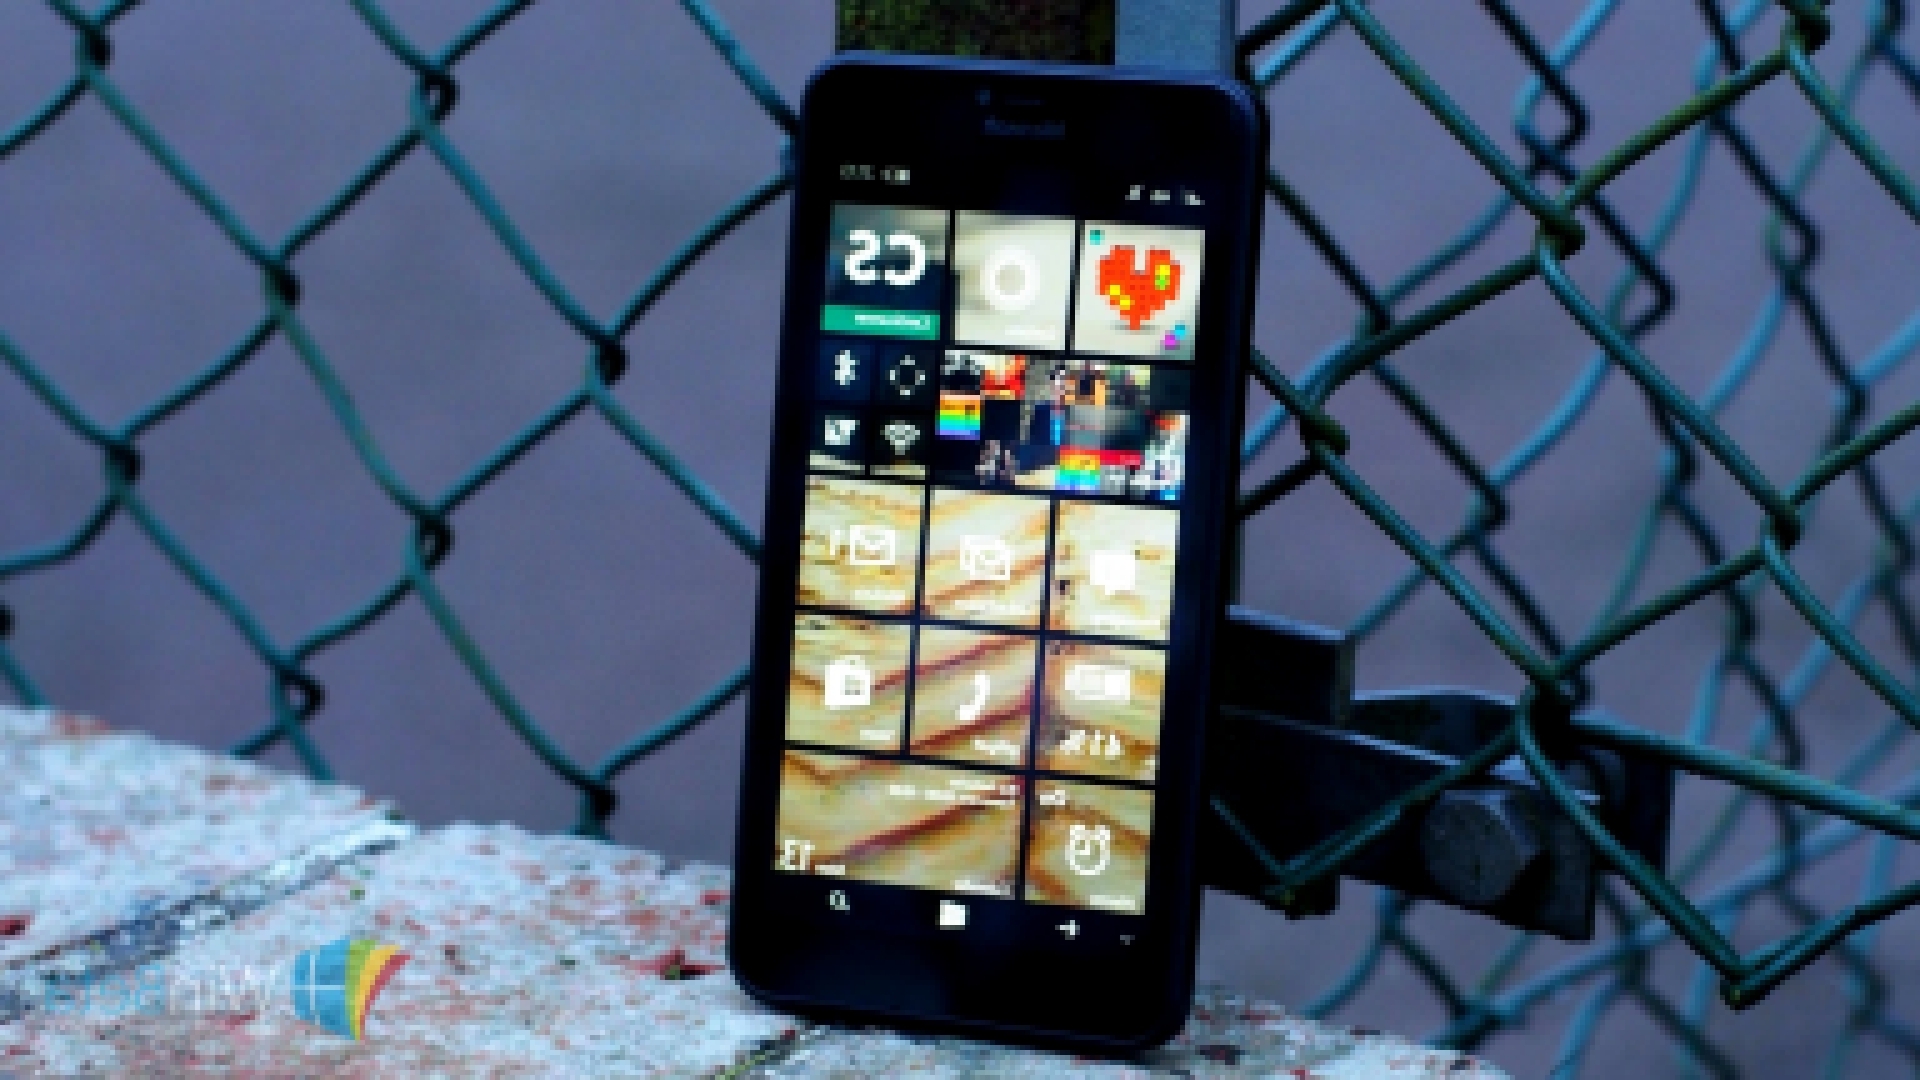 Другие картинки на тему "Win phone lumia 650 release" .